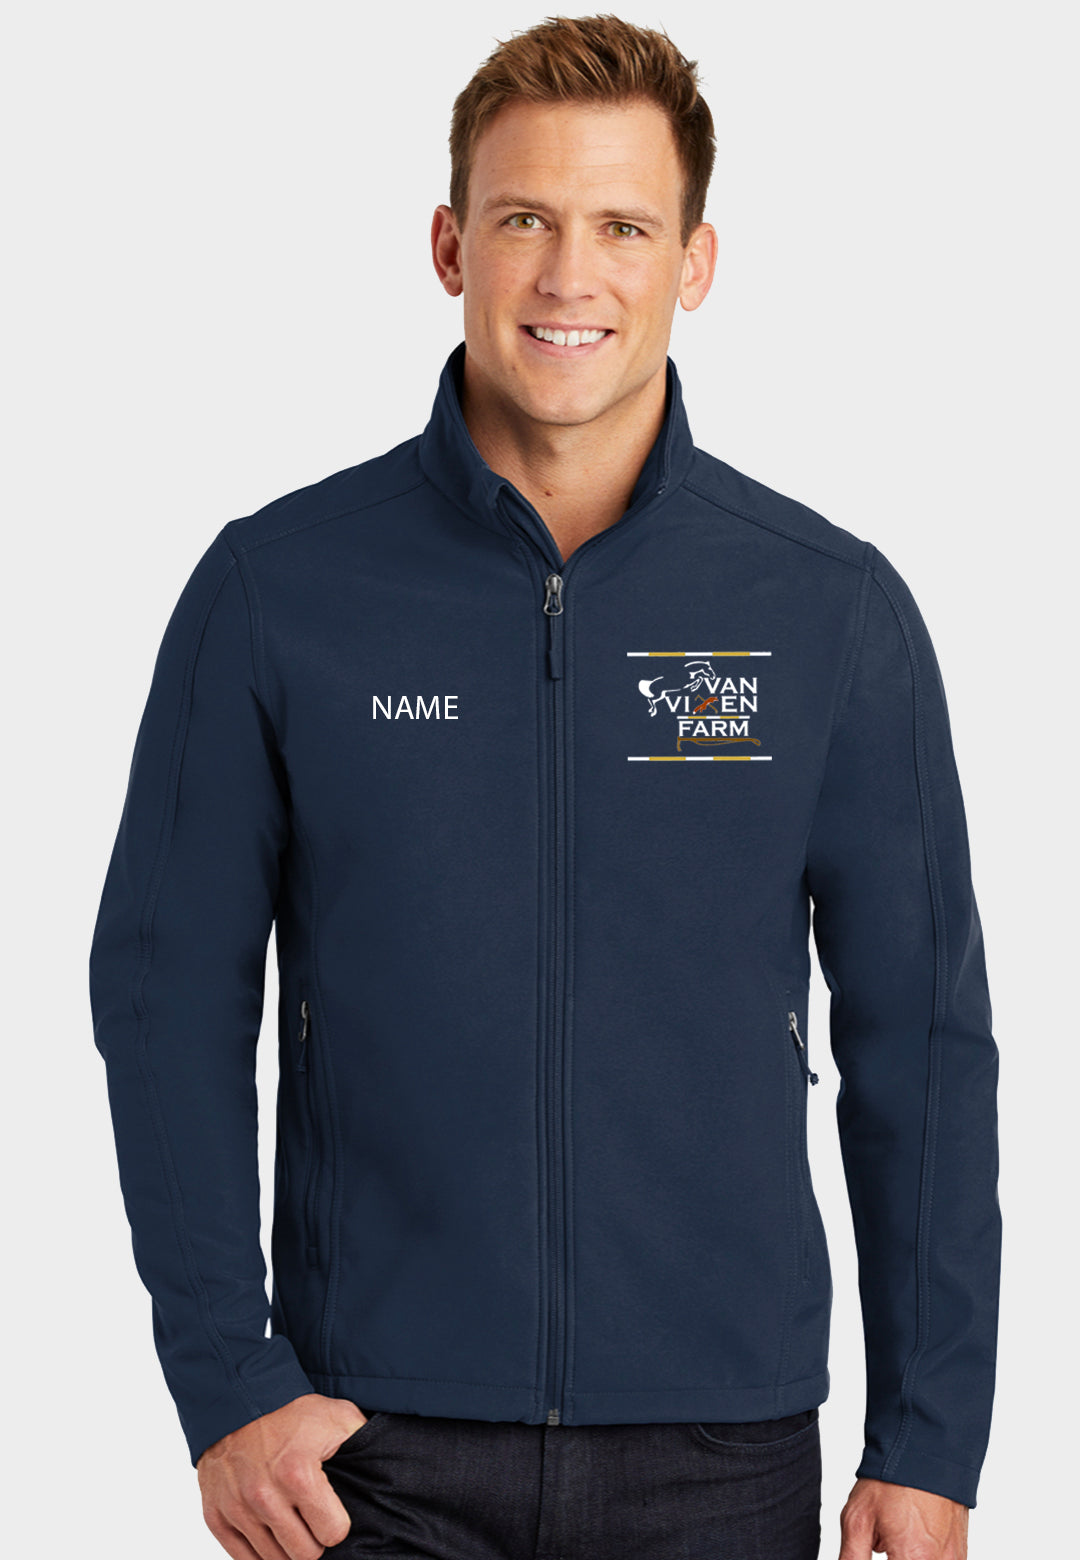 Van Vixen Farm Port Authority® Core Navy Soft Shell Jacket - Men's/Ladies/Youth